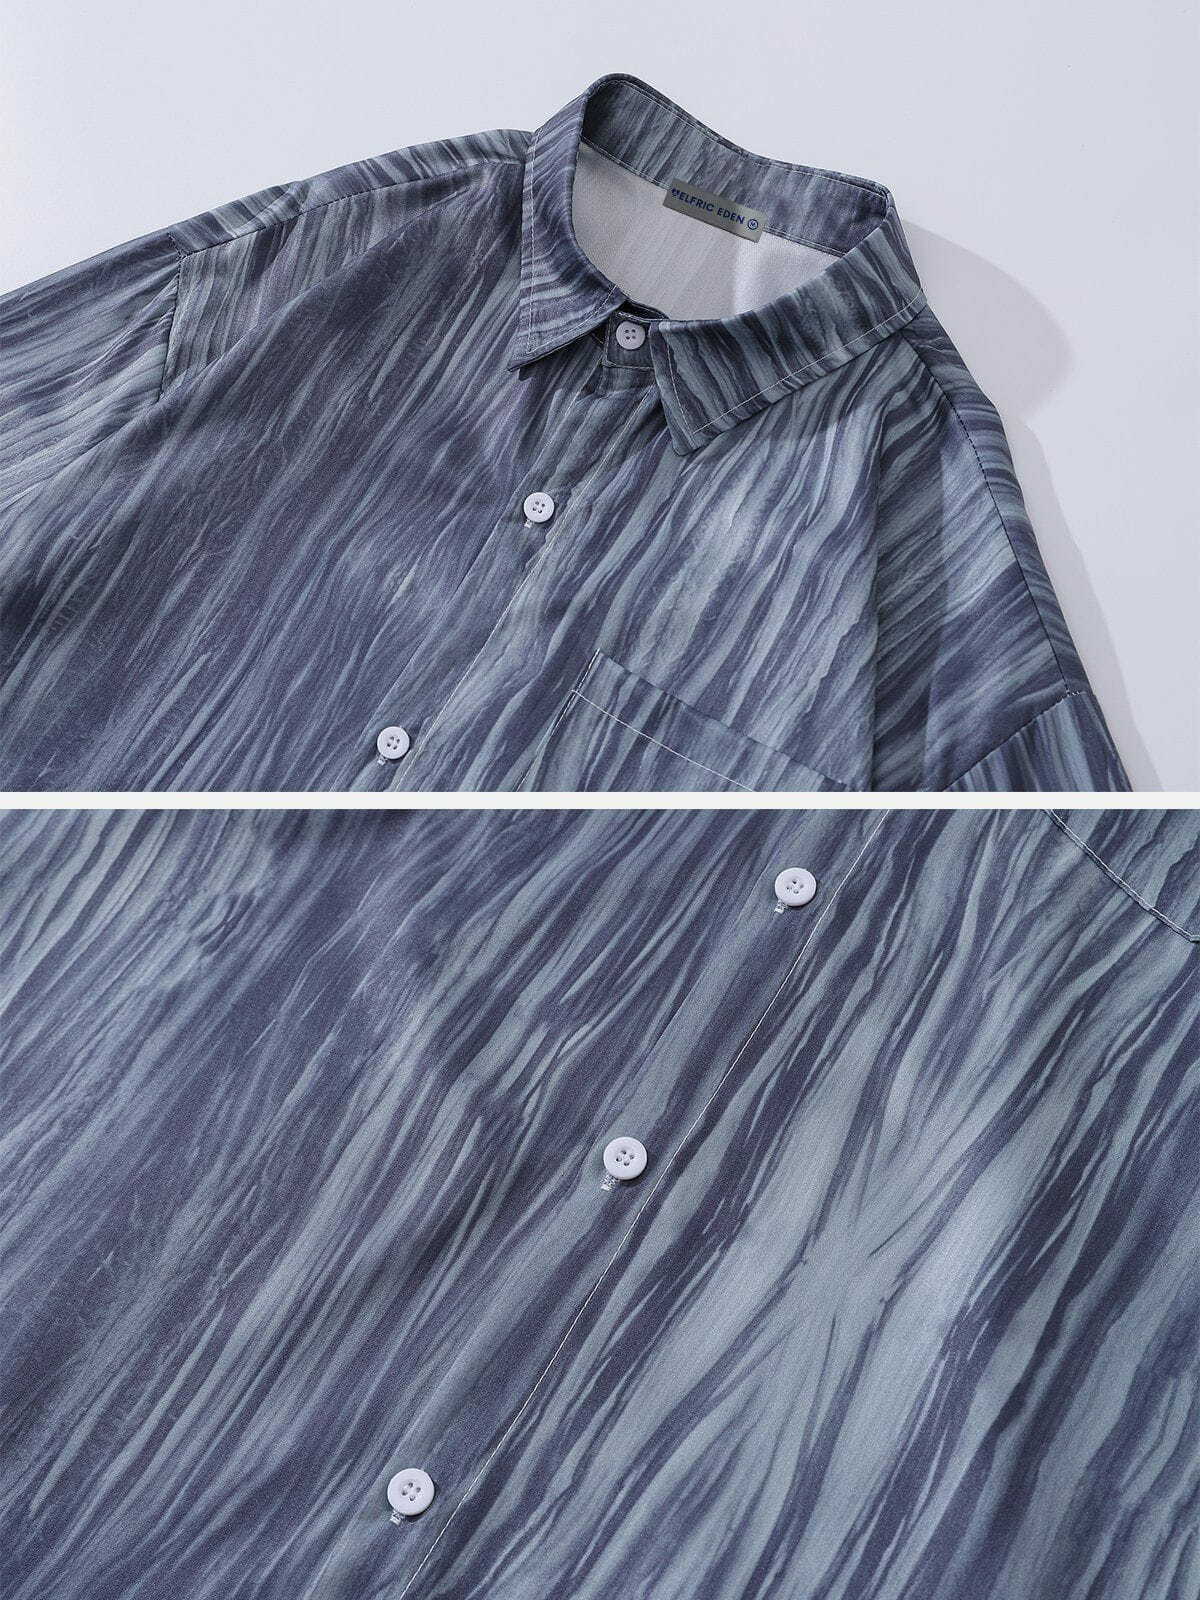 abstract stripe shirt sleek long sleeve urban trendsetter 5688